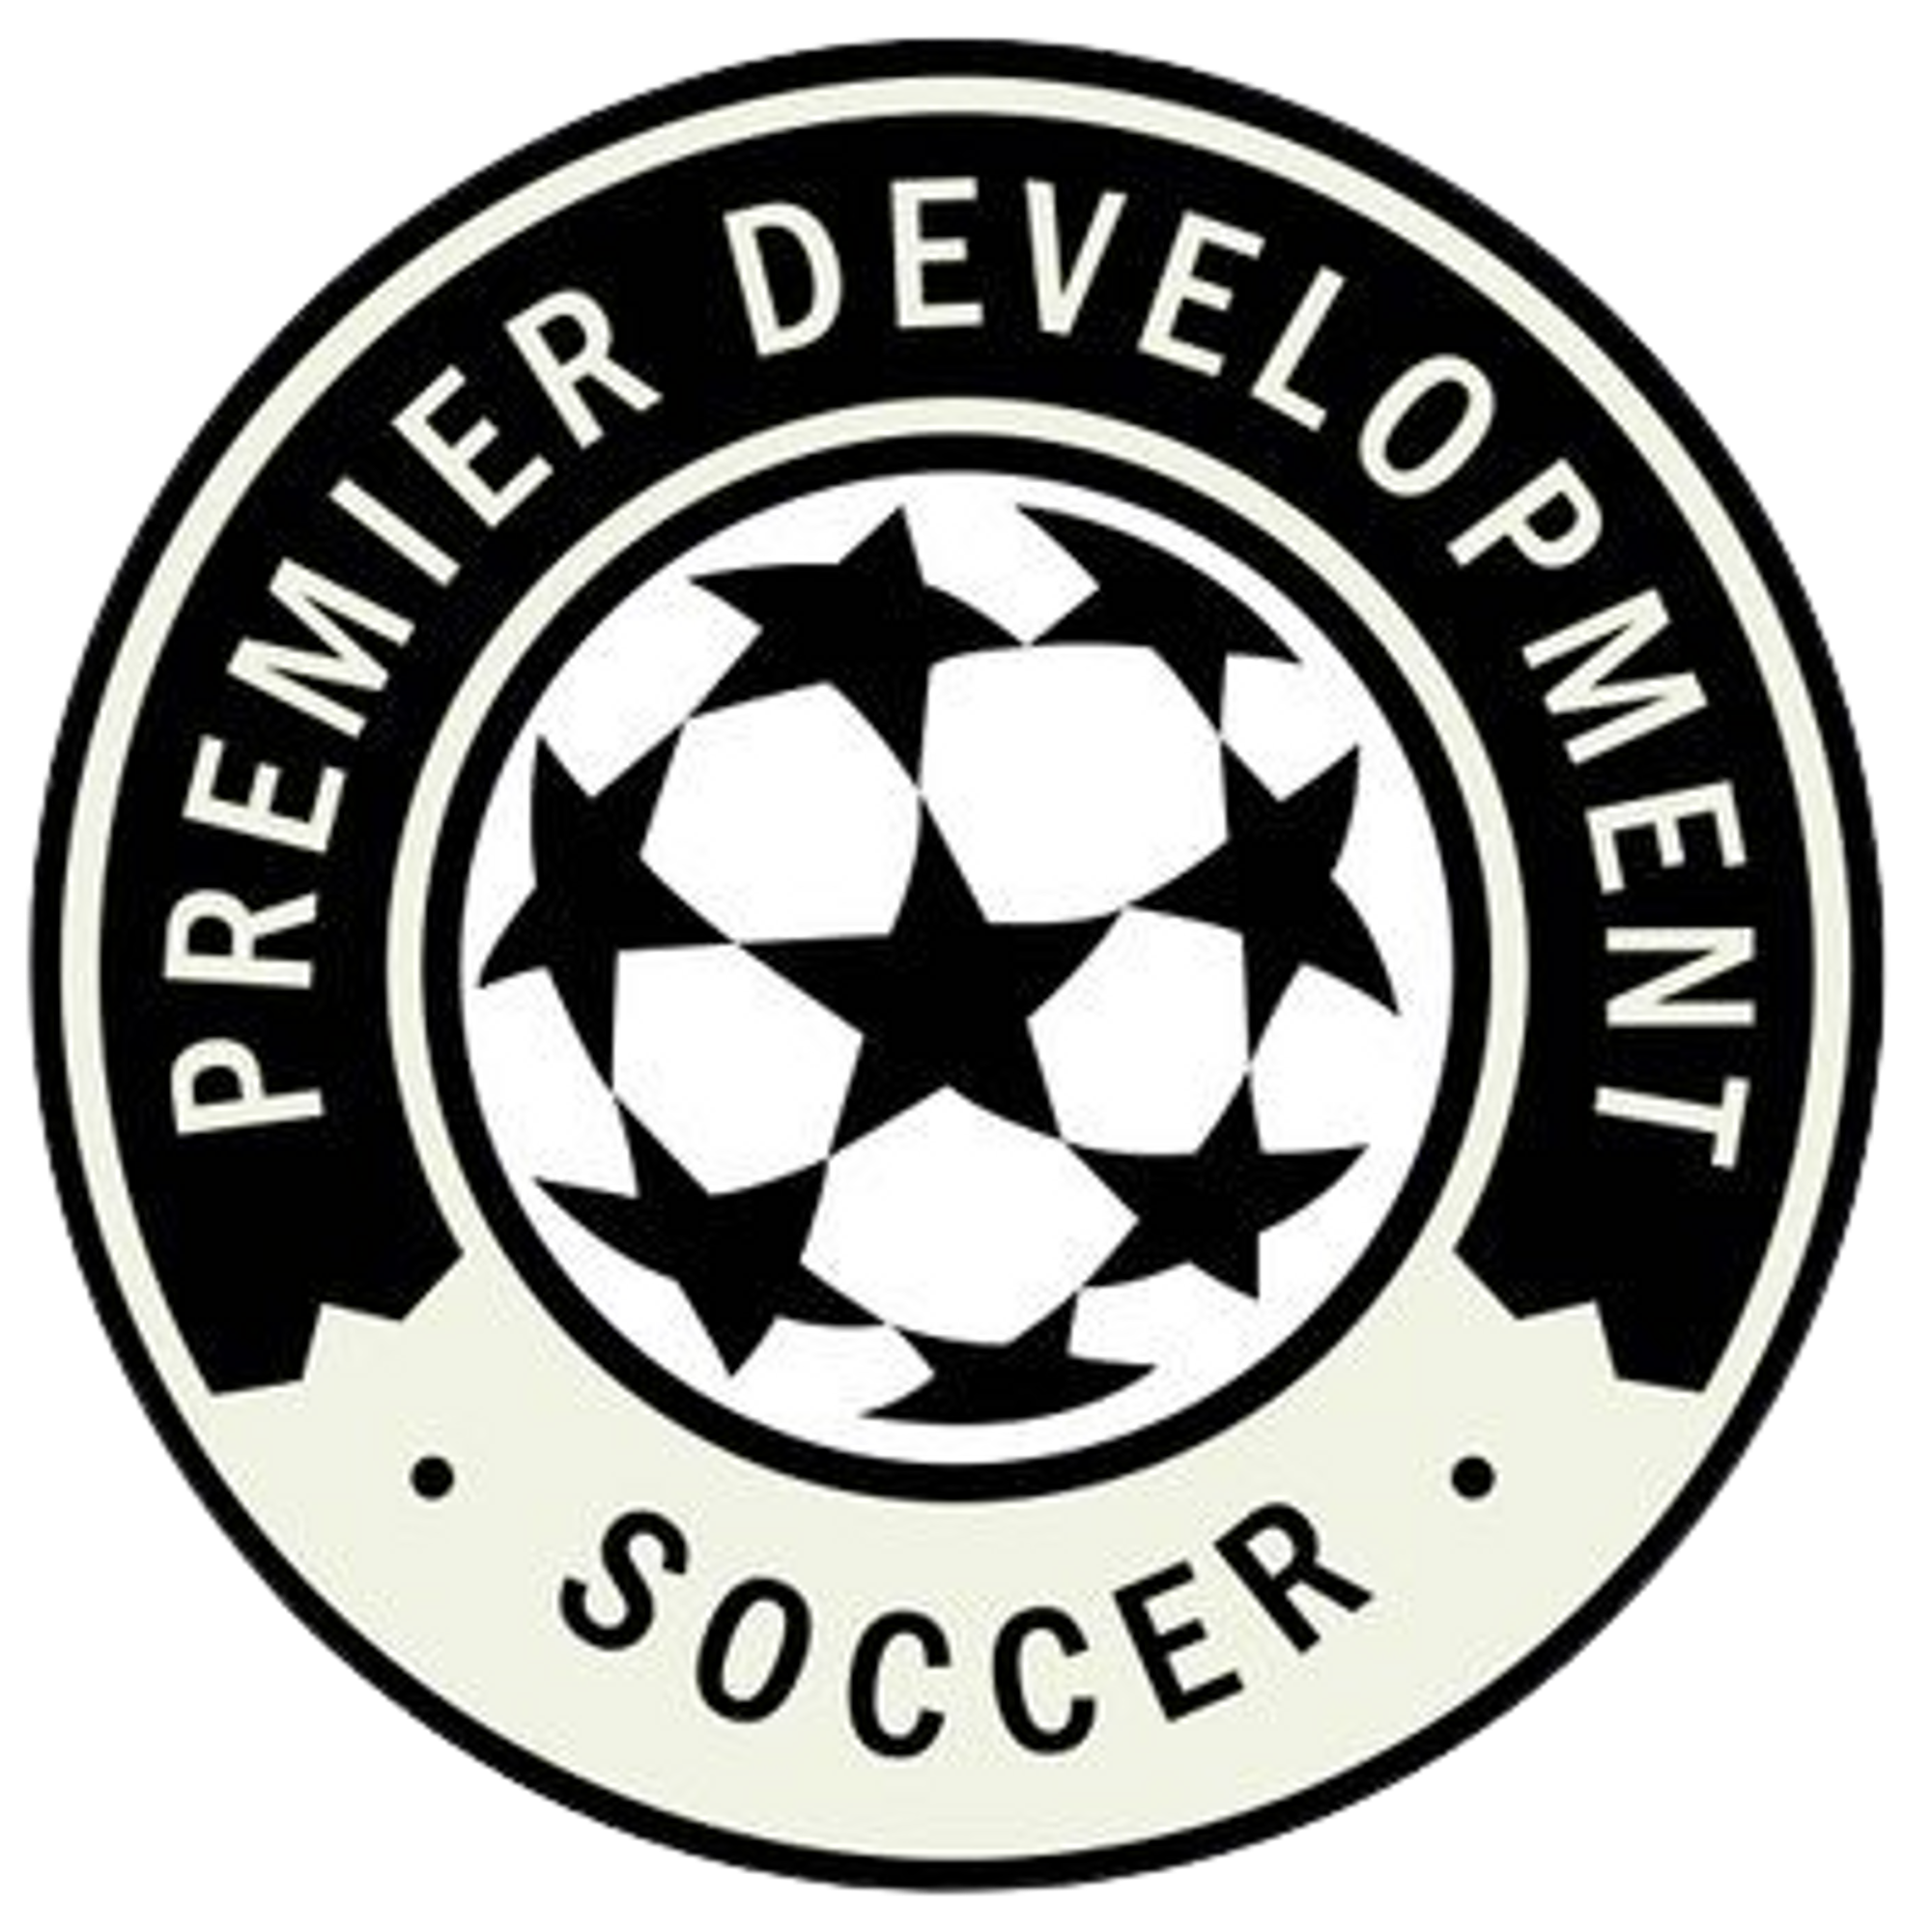 Premier Development Soccer | undefined Logo